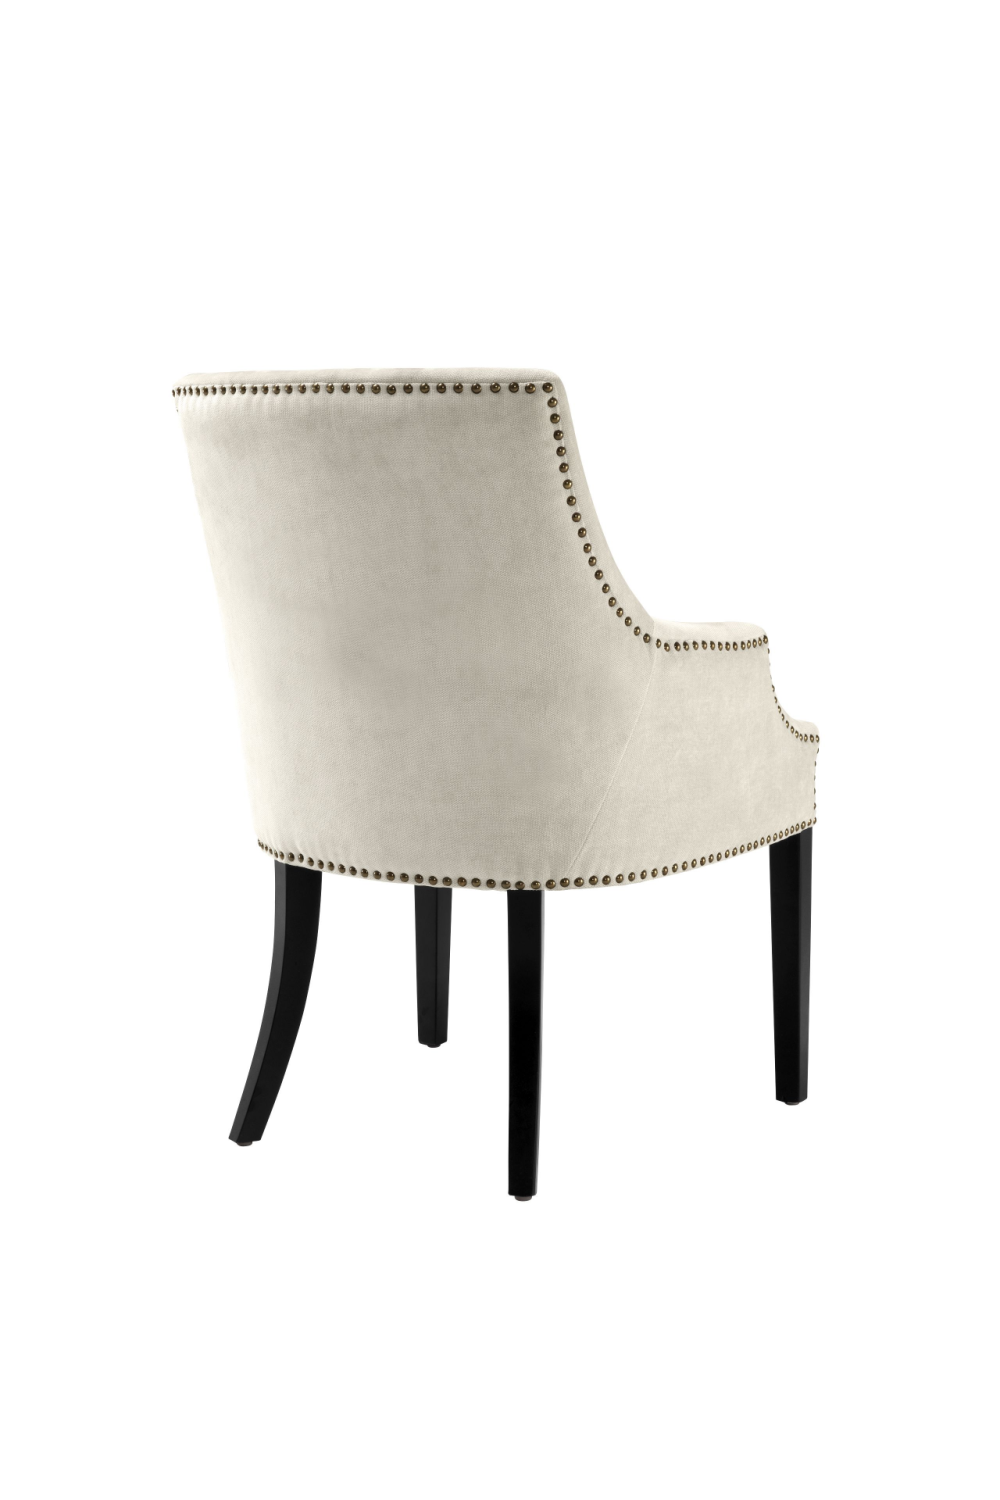 Studded Modern Dining Chair | Eichholtz Legacy | Oroa.com